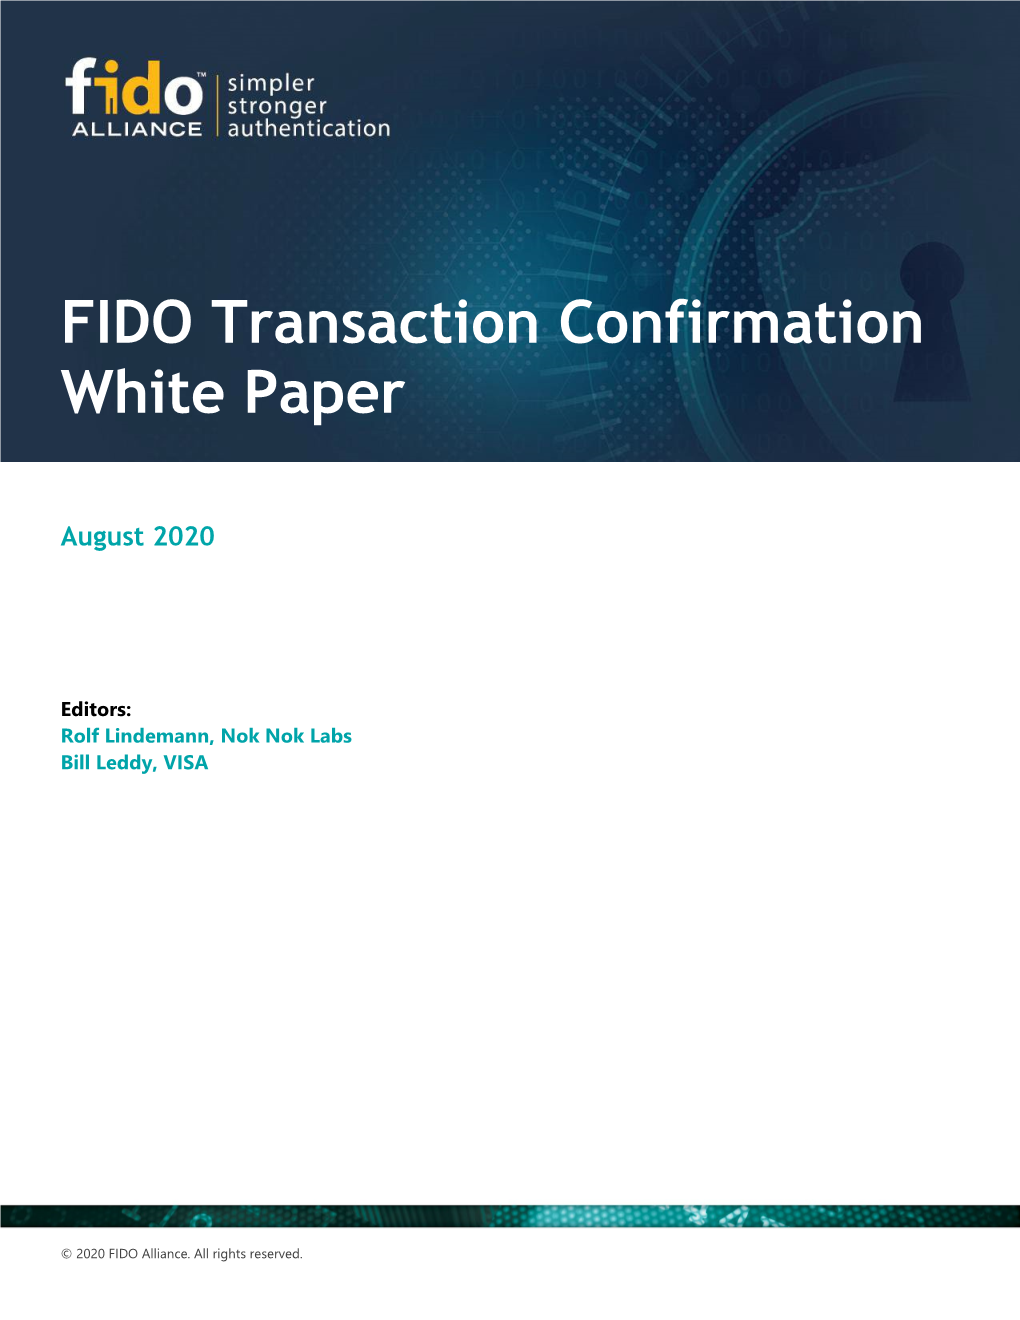 FIDO Transaction Confirmation White Paper